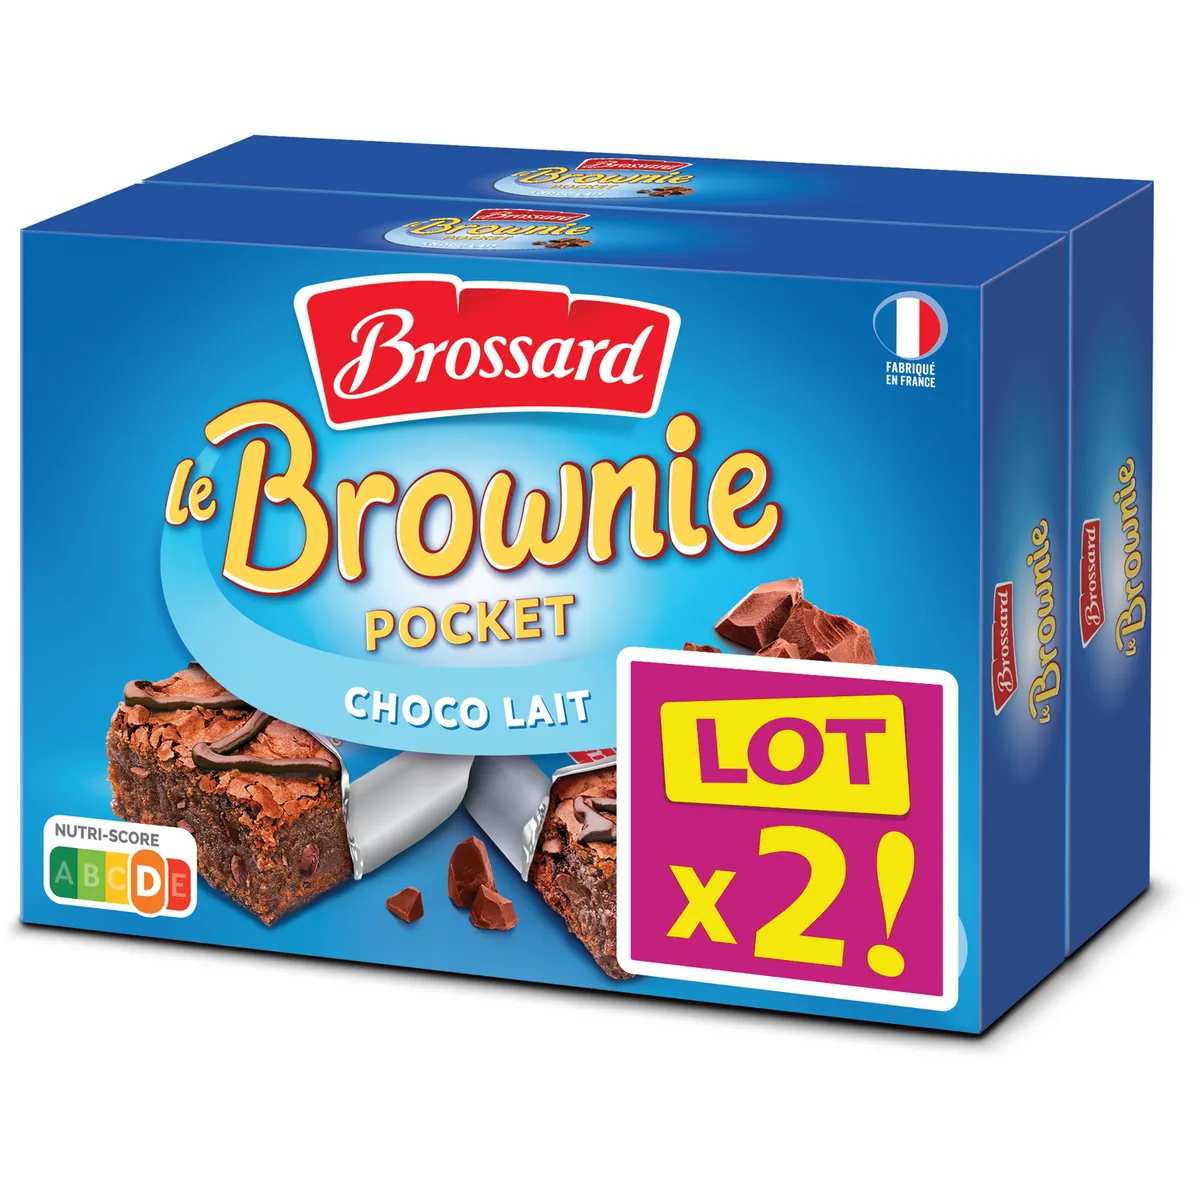 le brownie pocket brossard